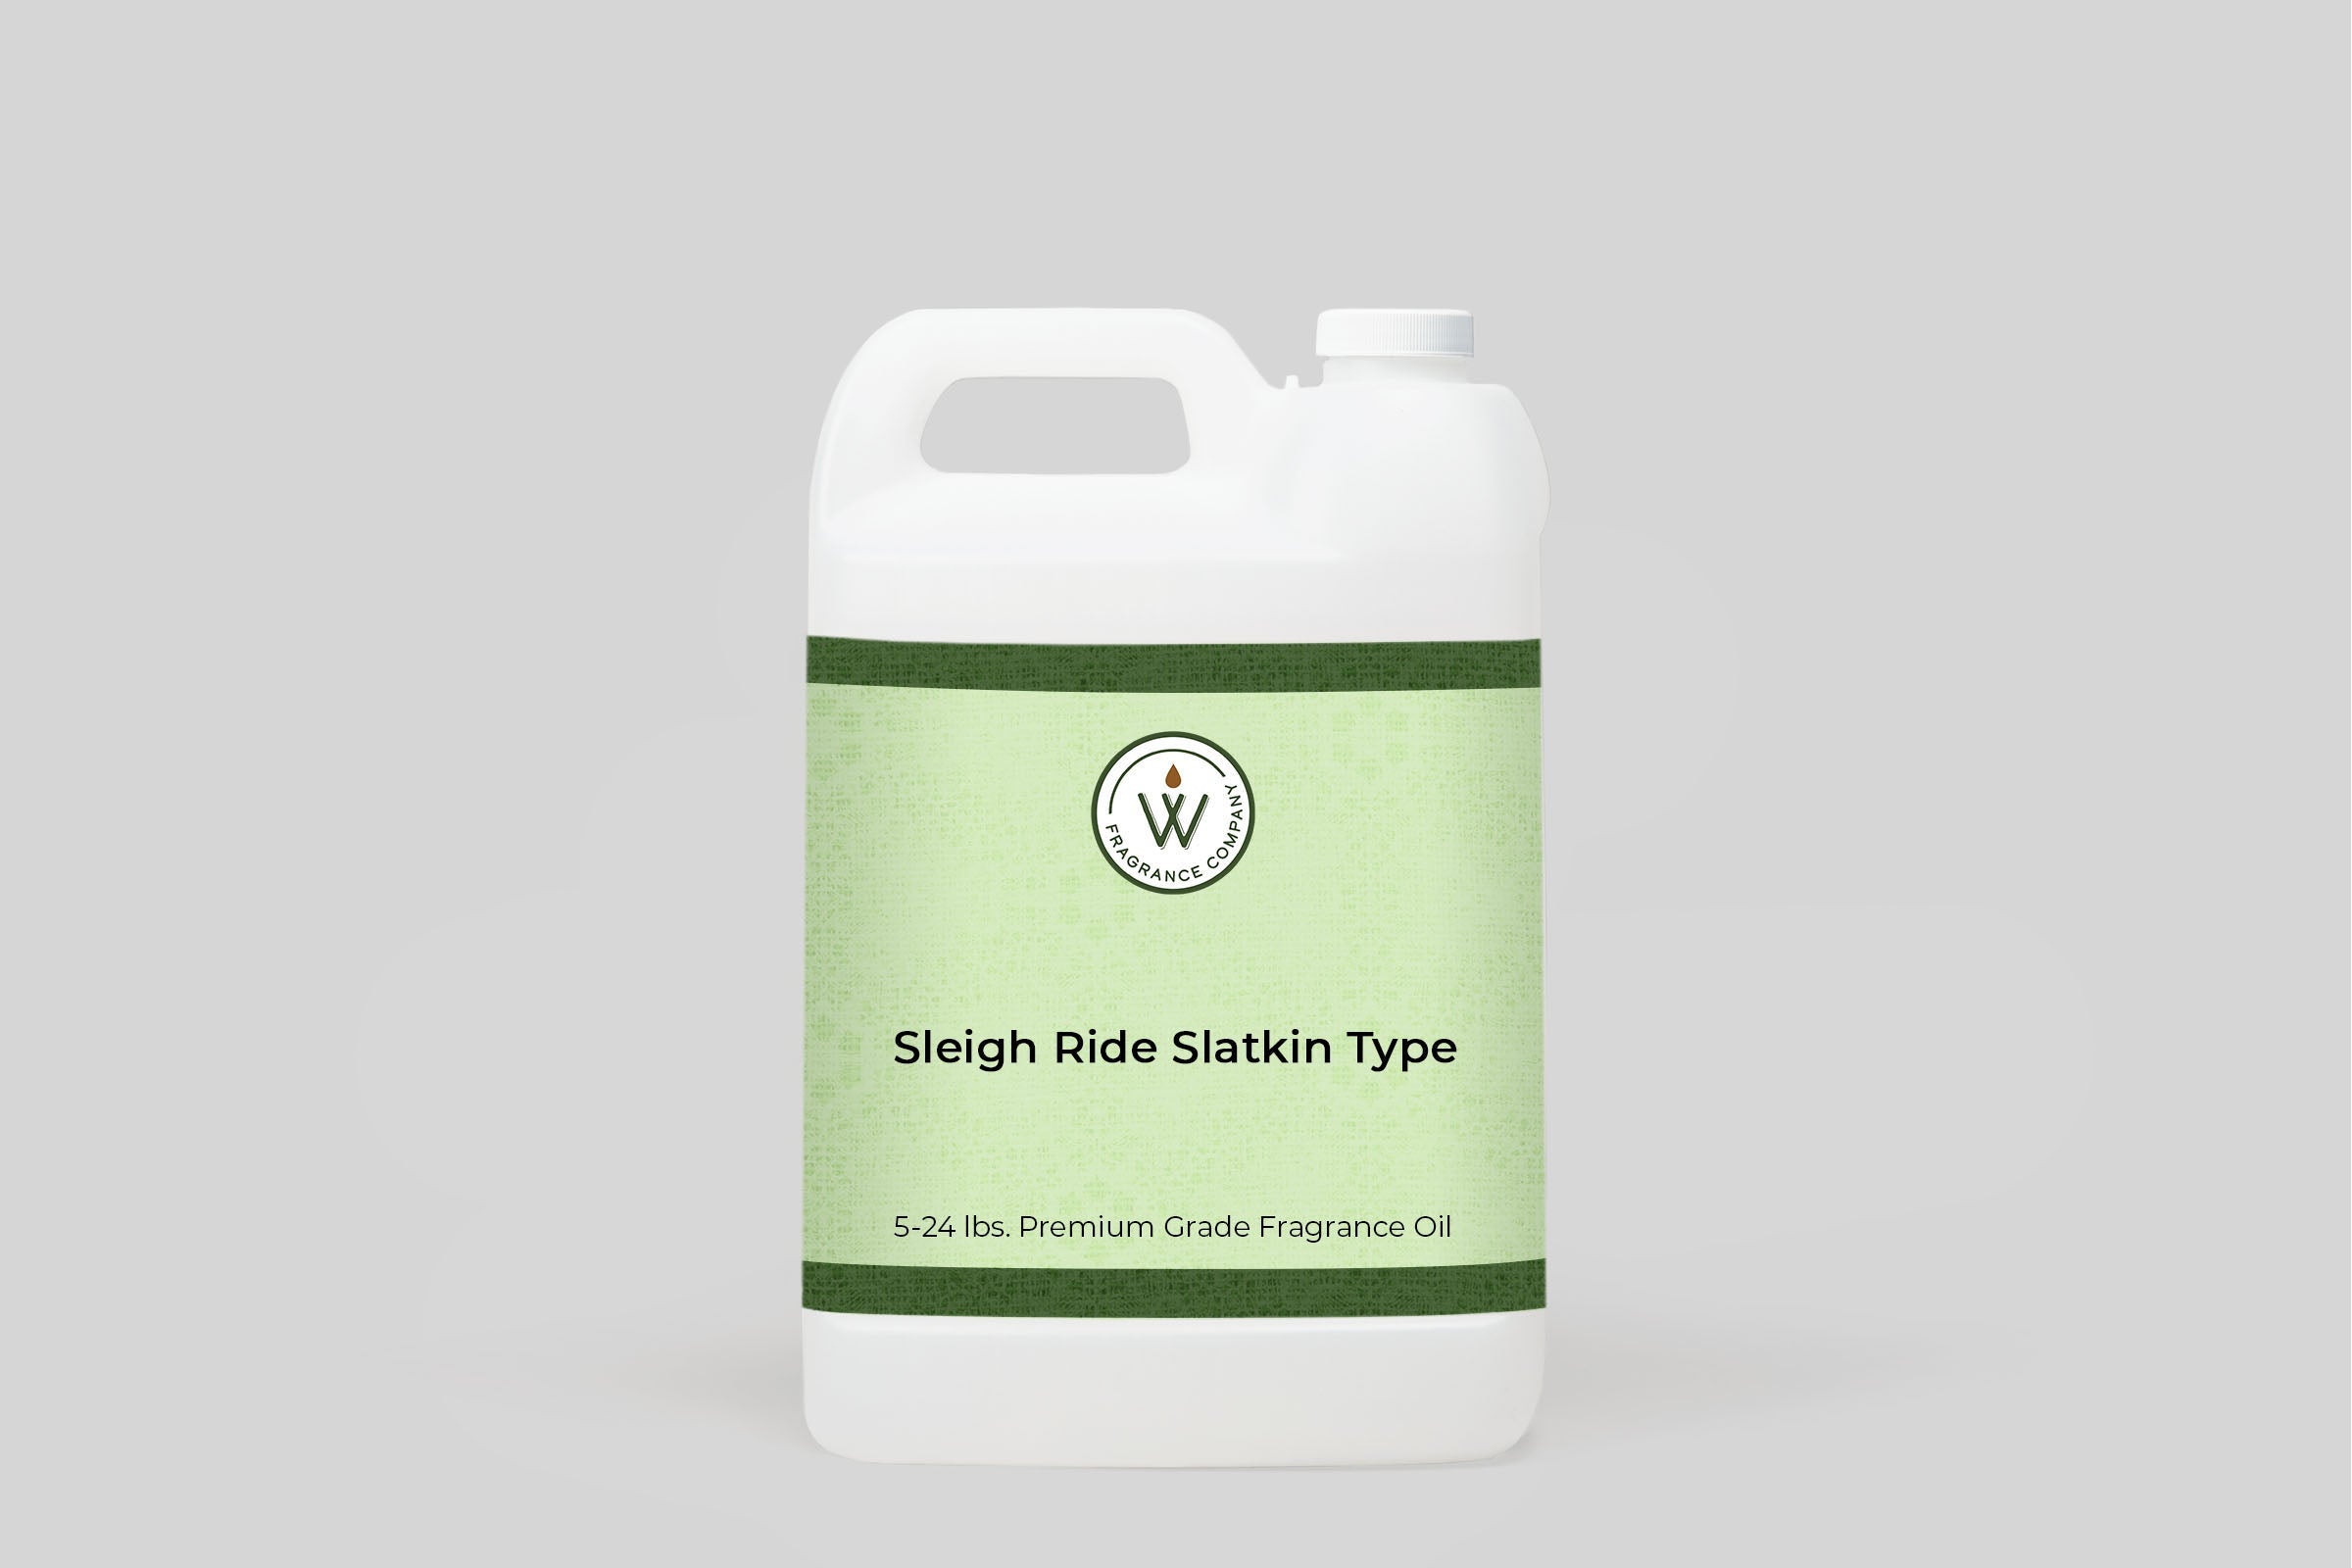 Sleigh Ride Slatkin Type Fragrance Oil